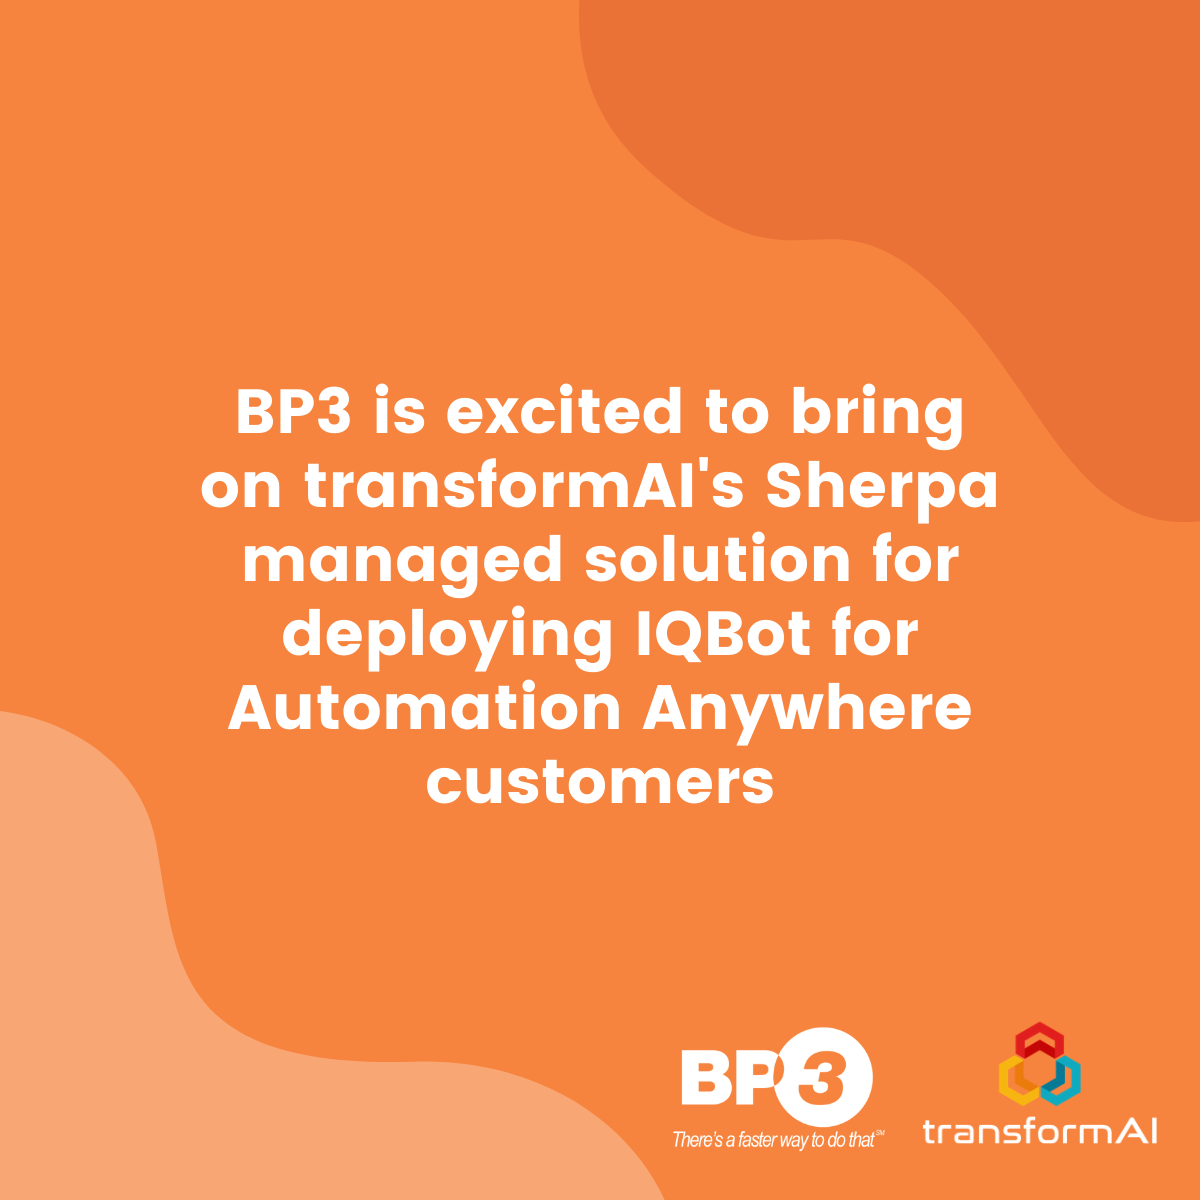 BP3 Global transformAI IQBot announcement image